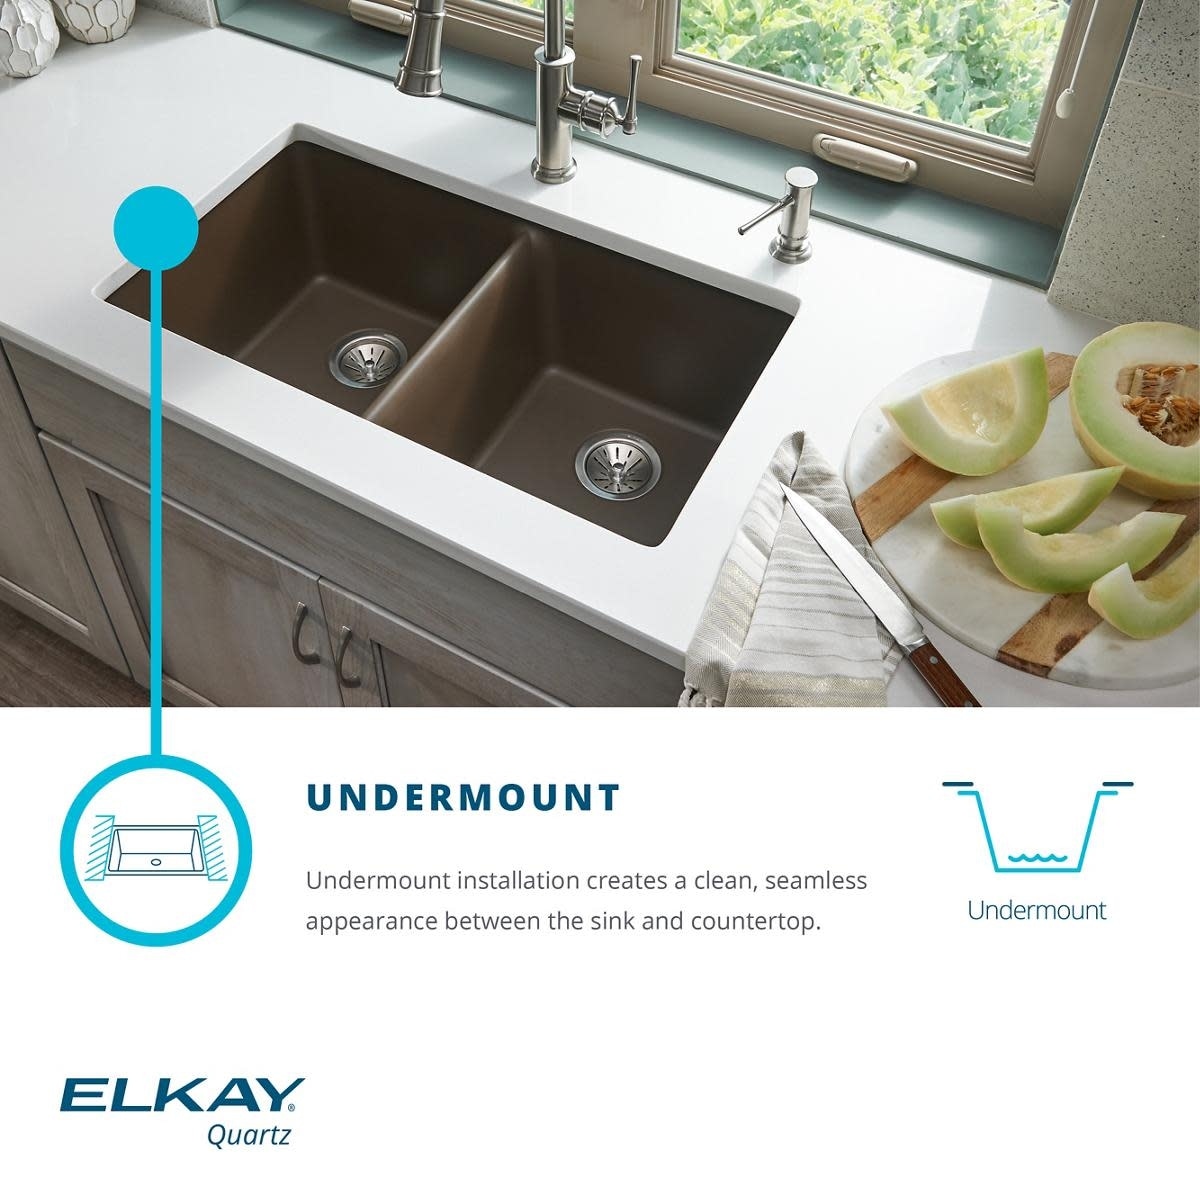 Elkay Elghu3322r Quartz Classic 33 Double Basin Granite Composite Kitchen Sink For Undermount Installations With 60 40 Split